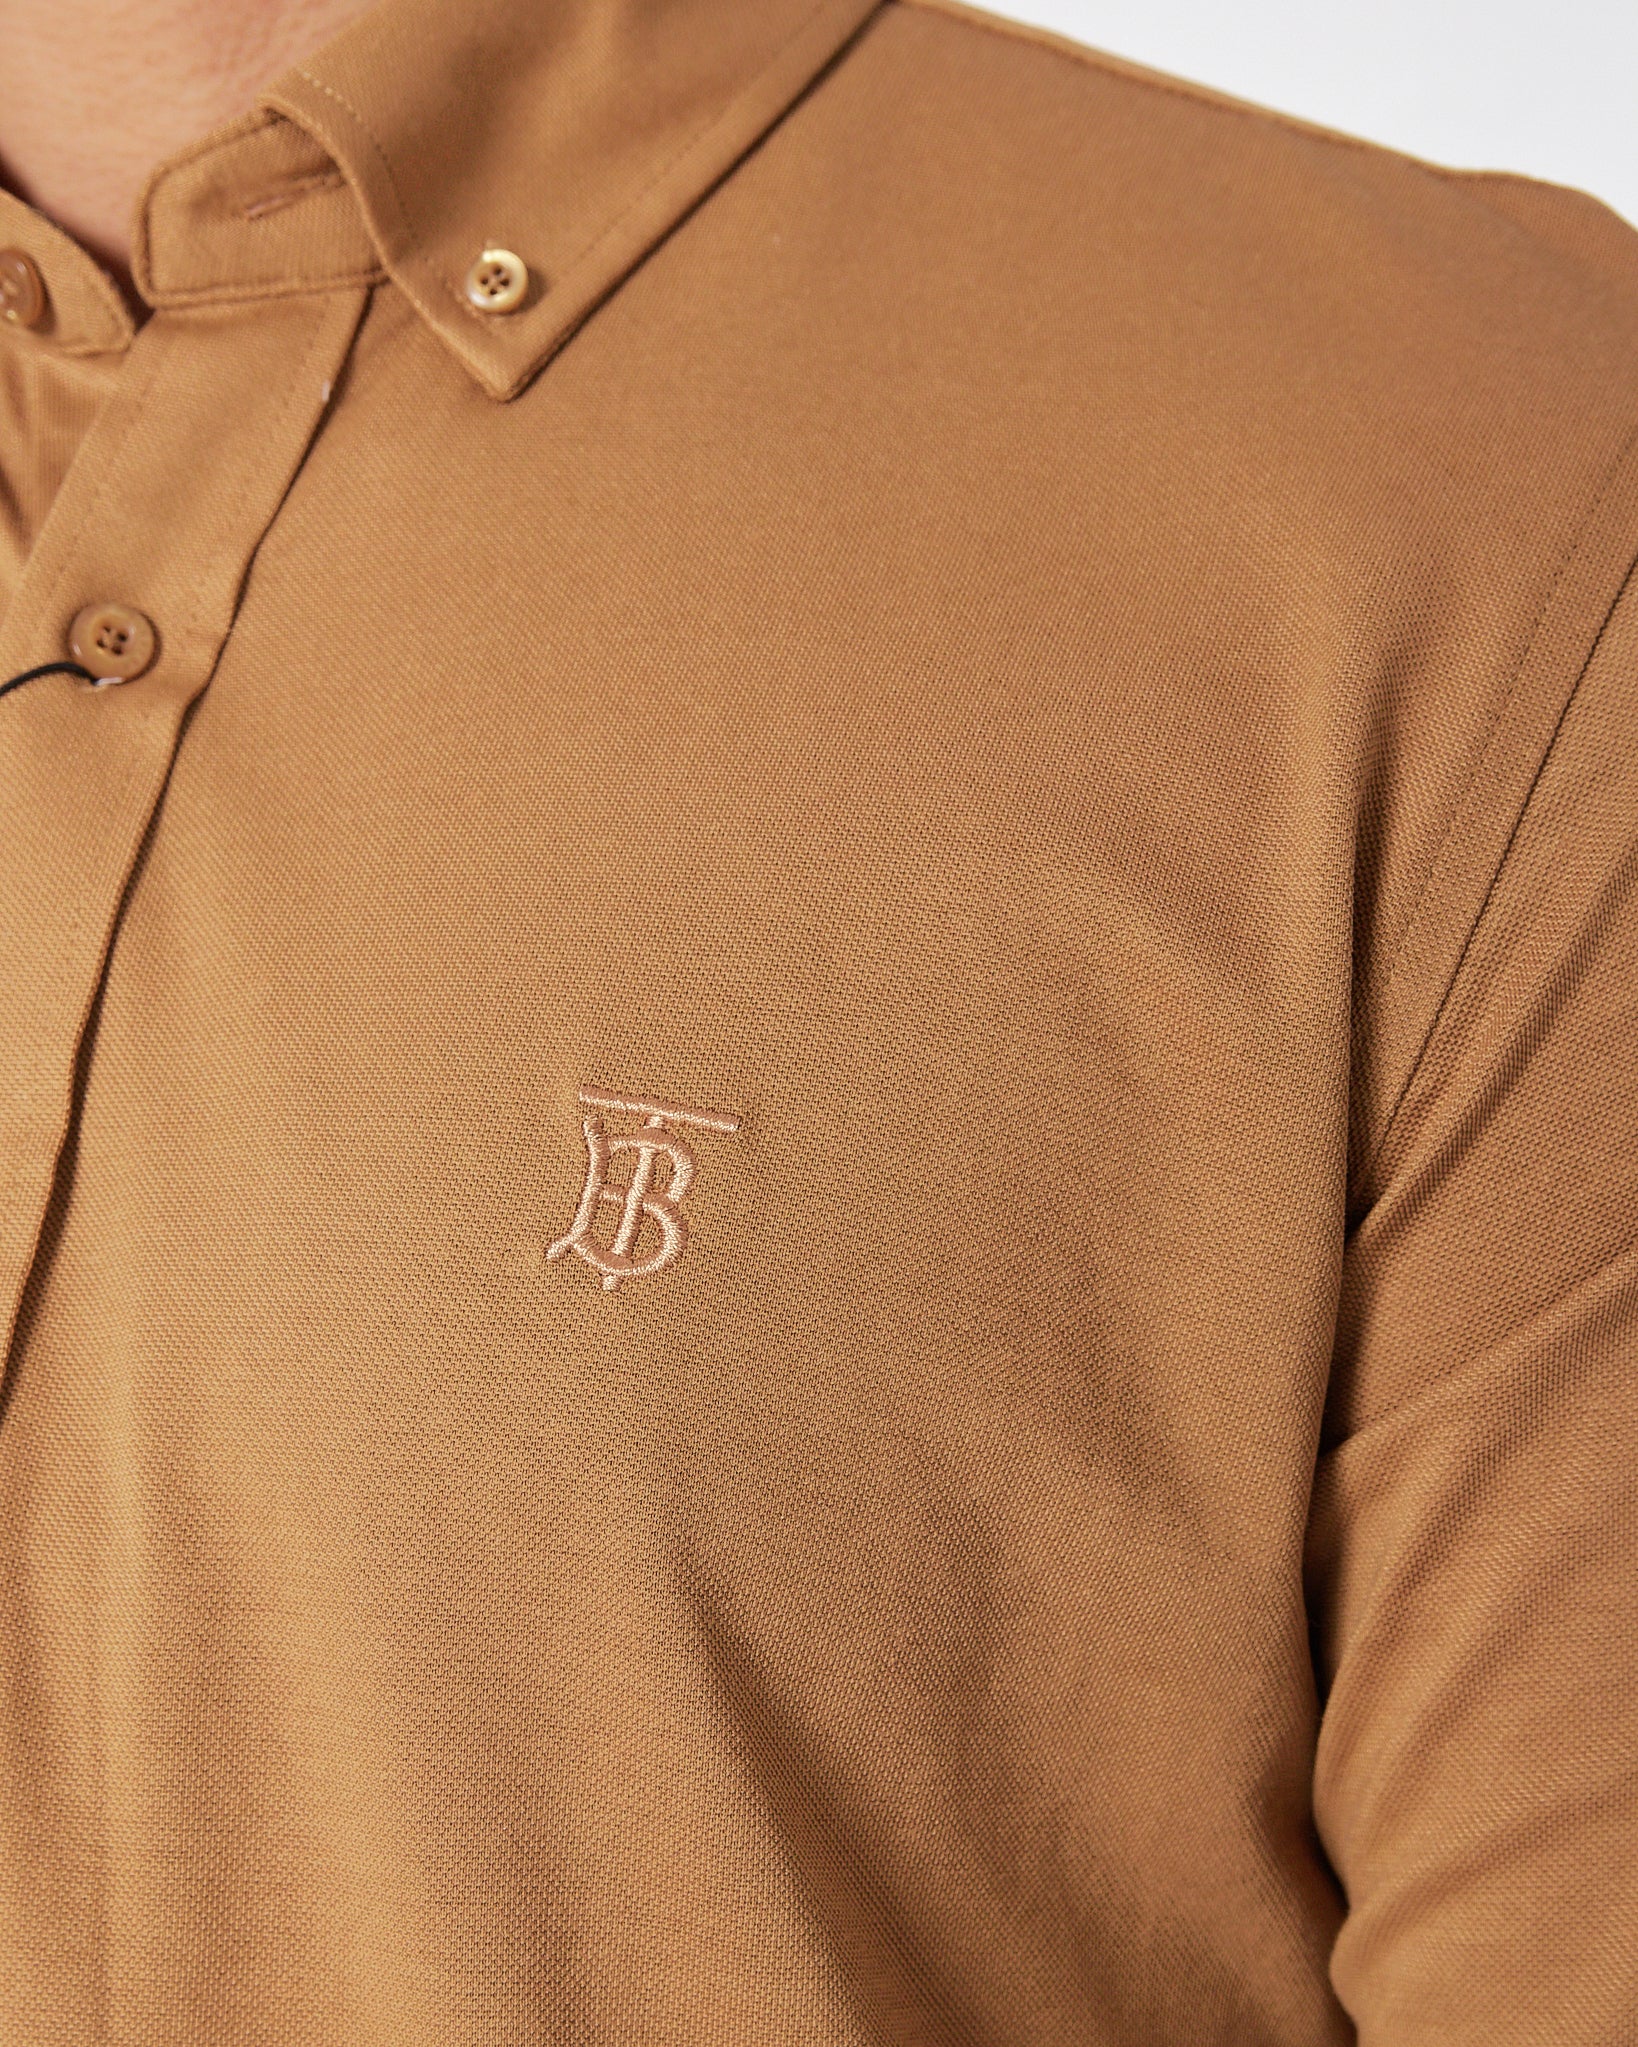 BUR Logo Embroidered Men Brown Shirts Long Sleeve 25.90